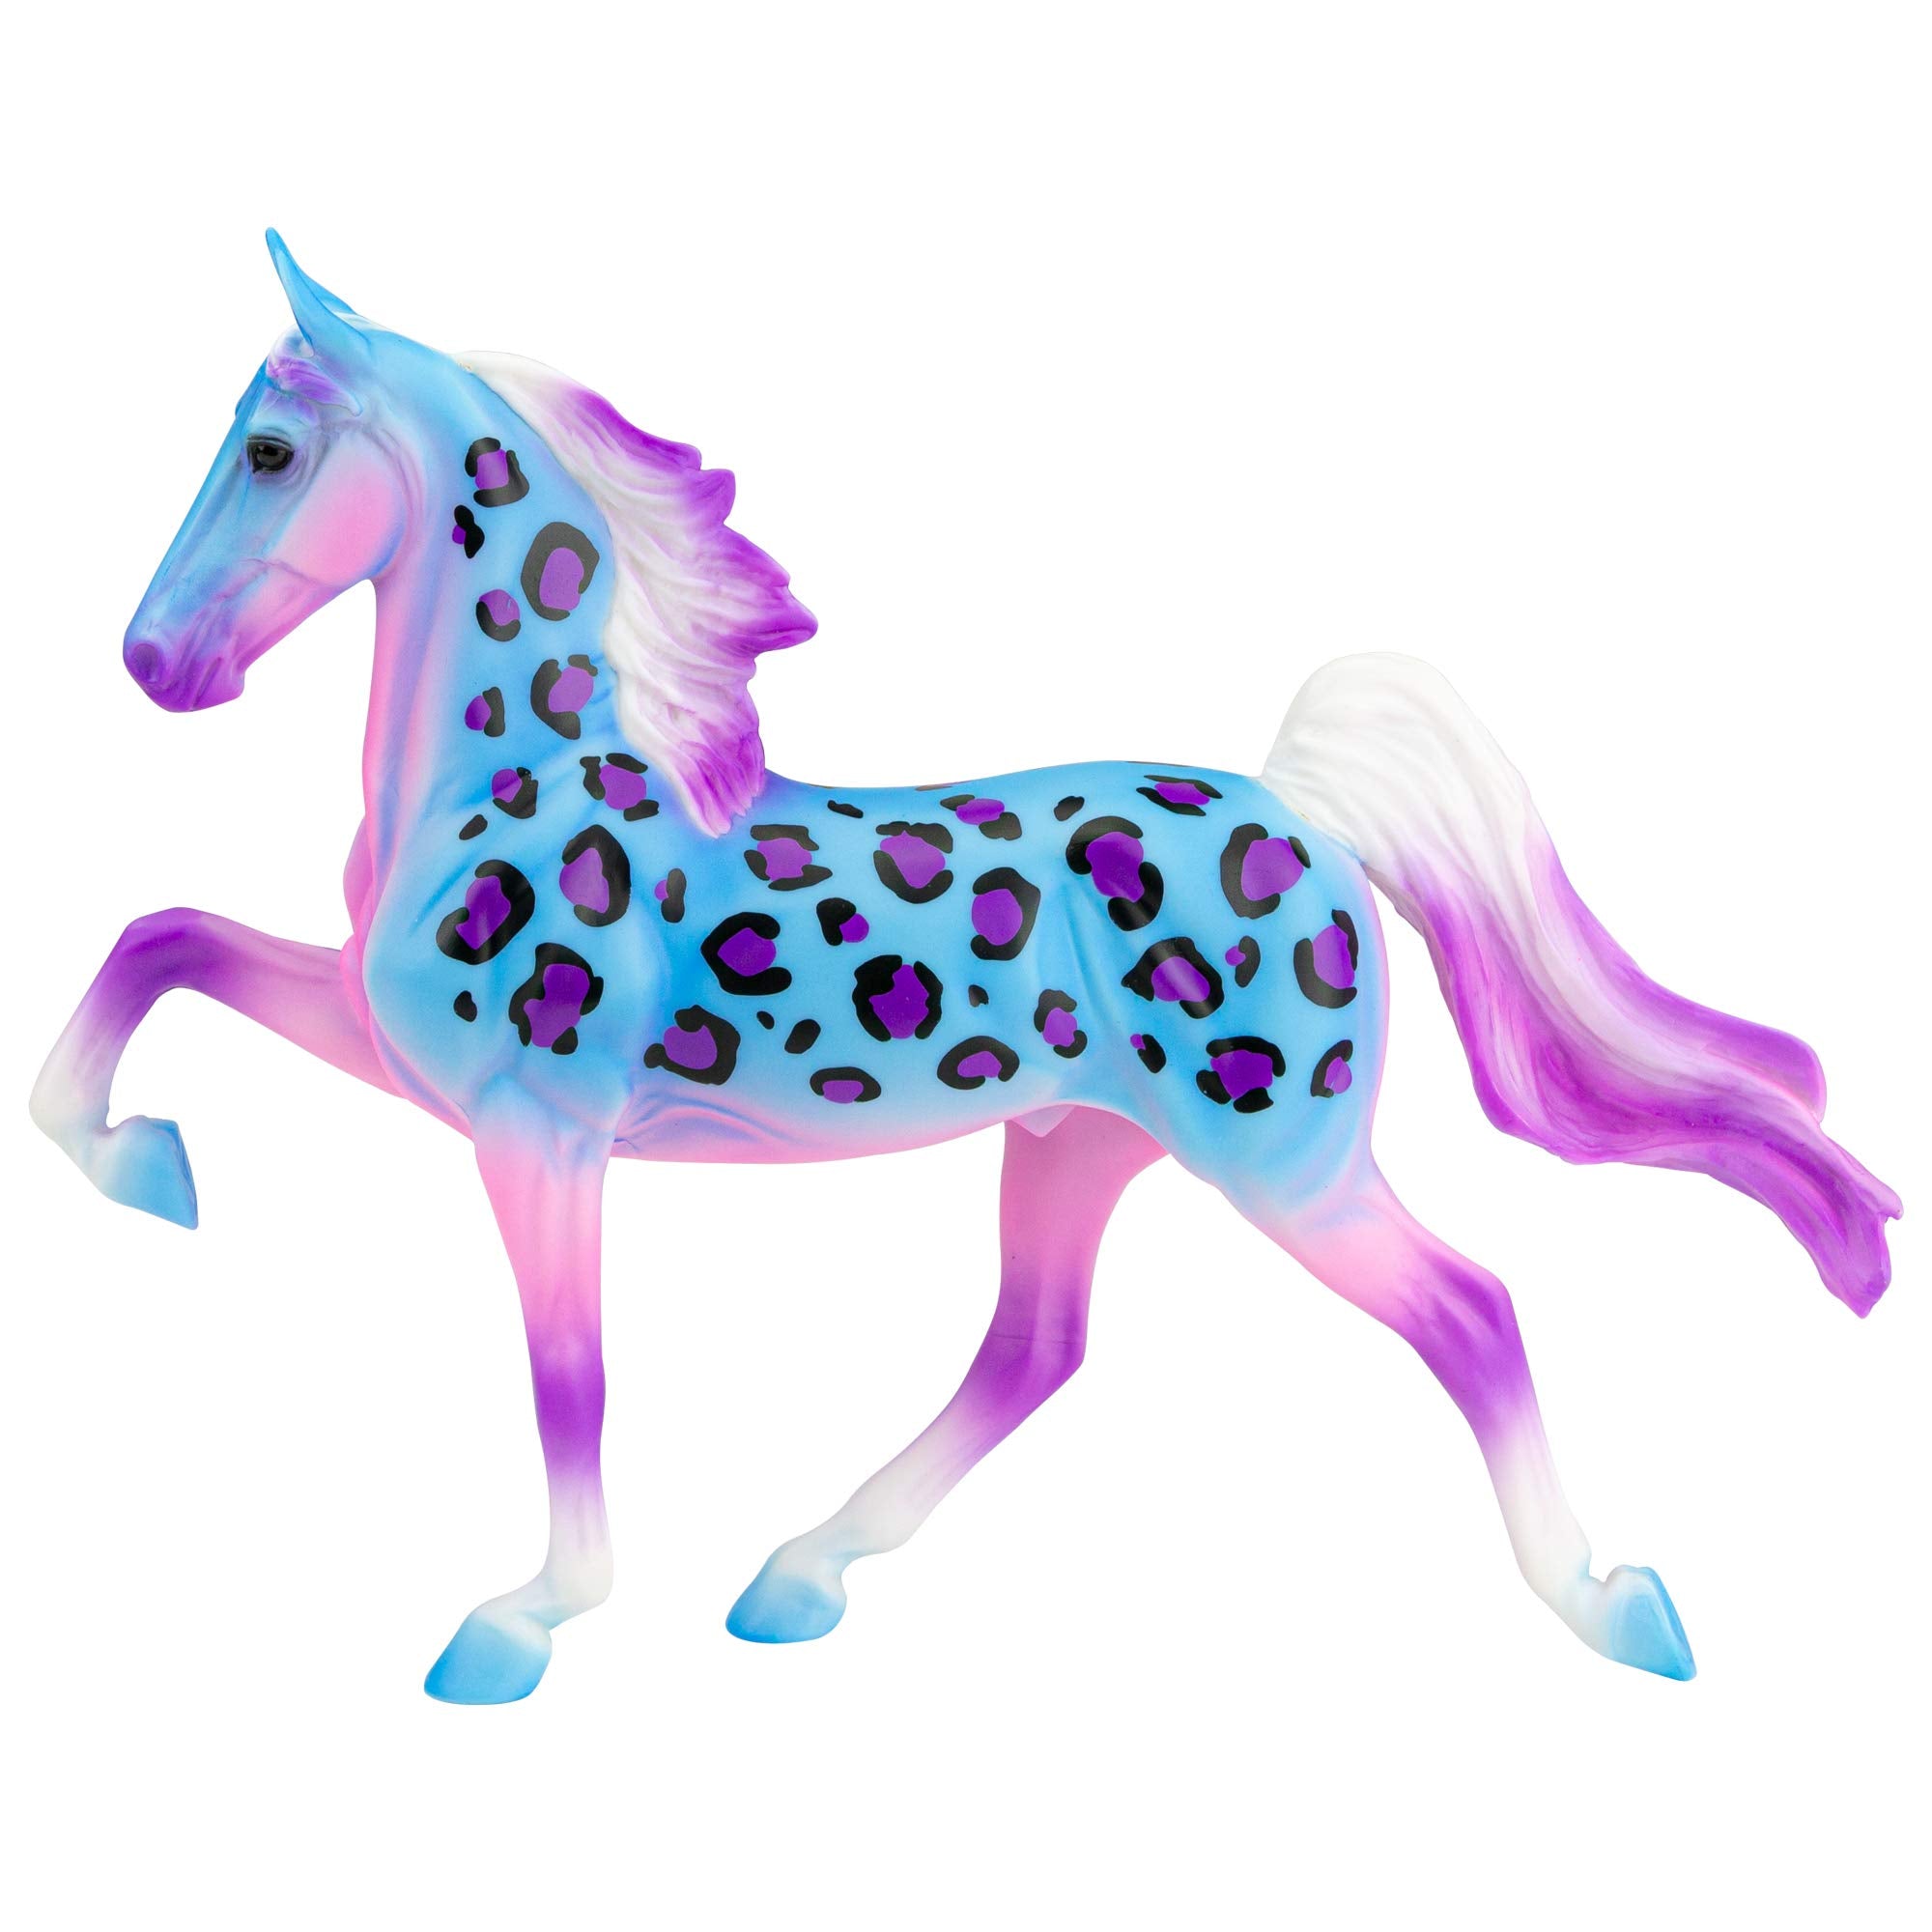 Breyer Horses Freedom Series Decorator Series | Fantasy Styles | 9.75" x 7" | 1:12 Scale